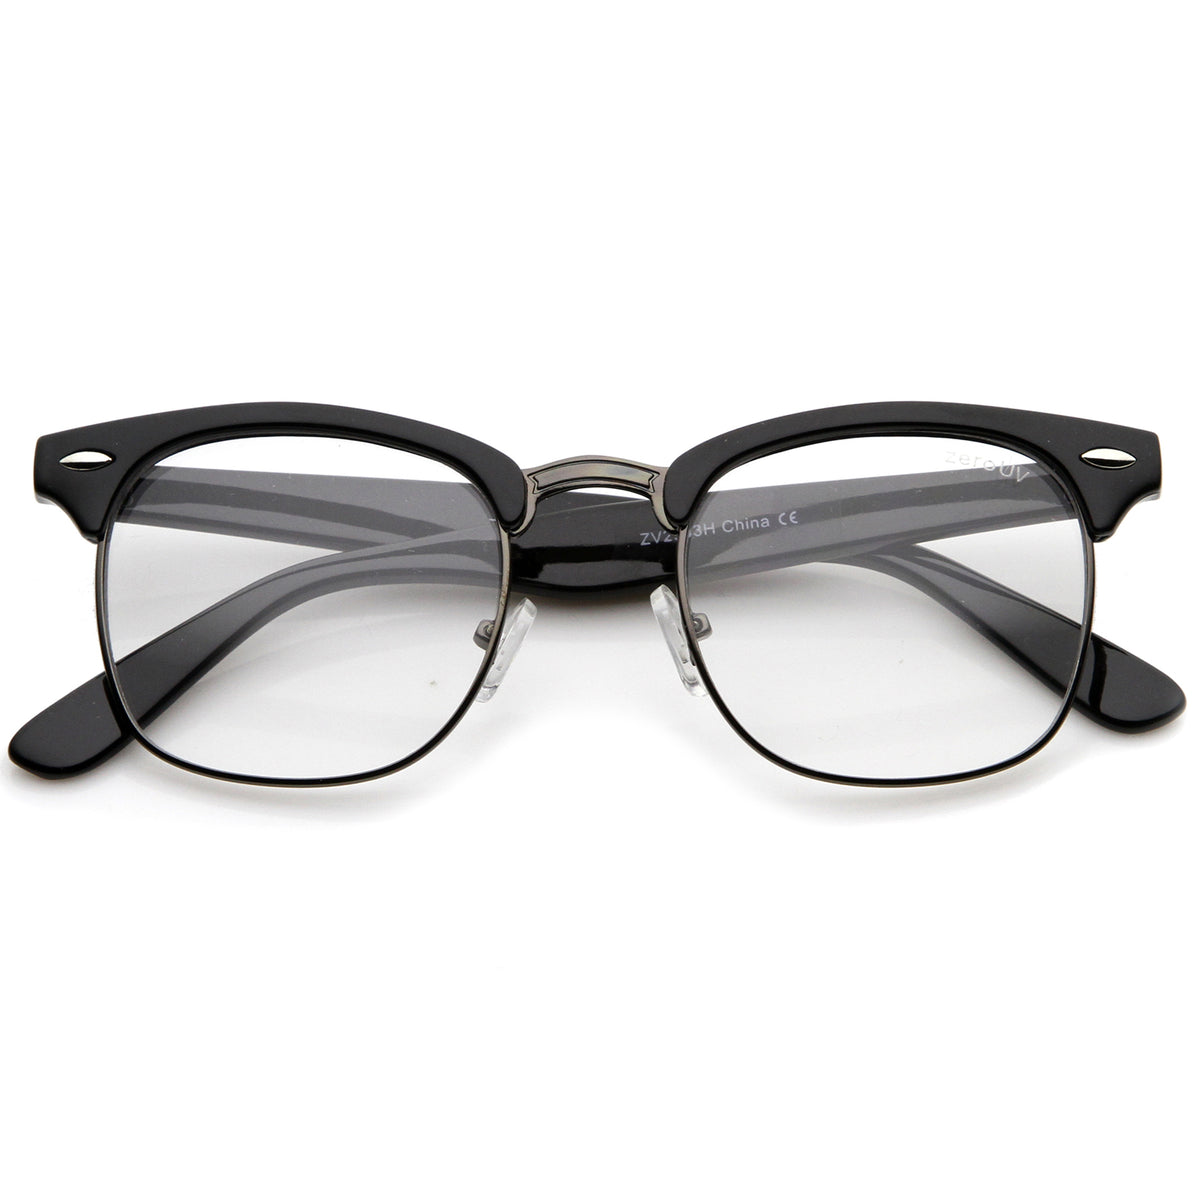 Retro Square Clear Lens Horn Rimmed Half Frame Eyeglasses 50mm